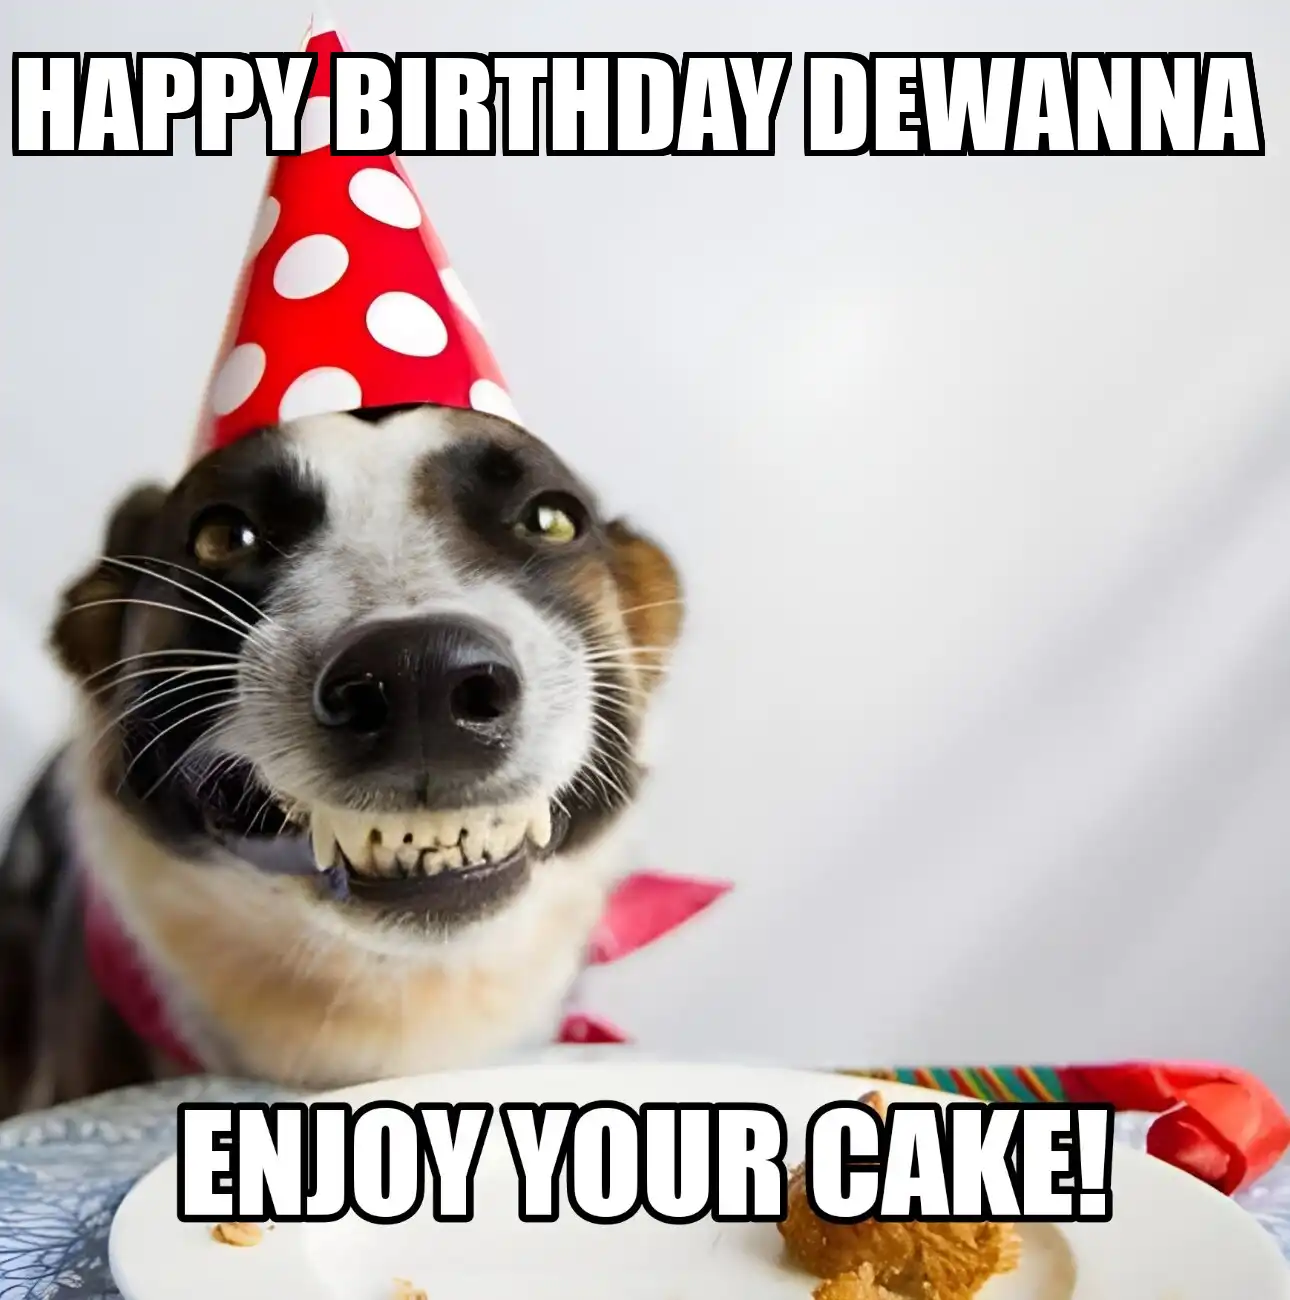 Happy Birthday Dewanna Enjoy Your Cake Dog Meme